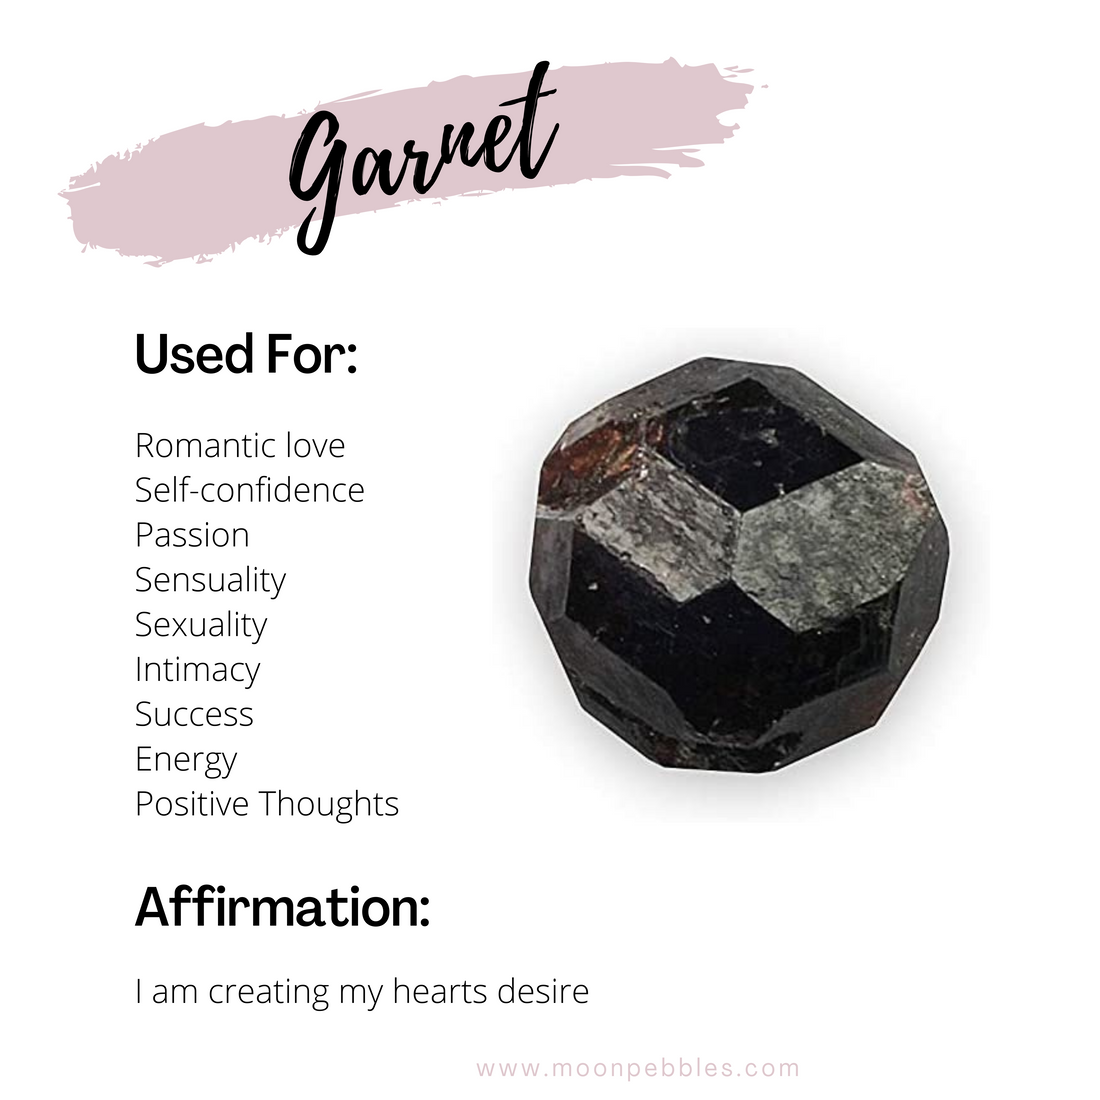 Color-Change Garnet Gems: Properties, Meanings, Value & More